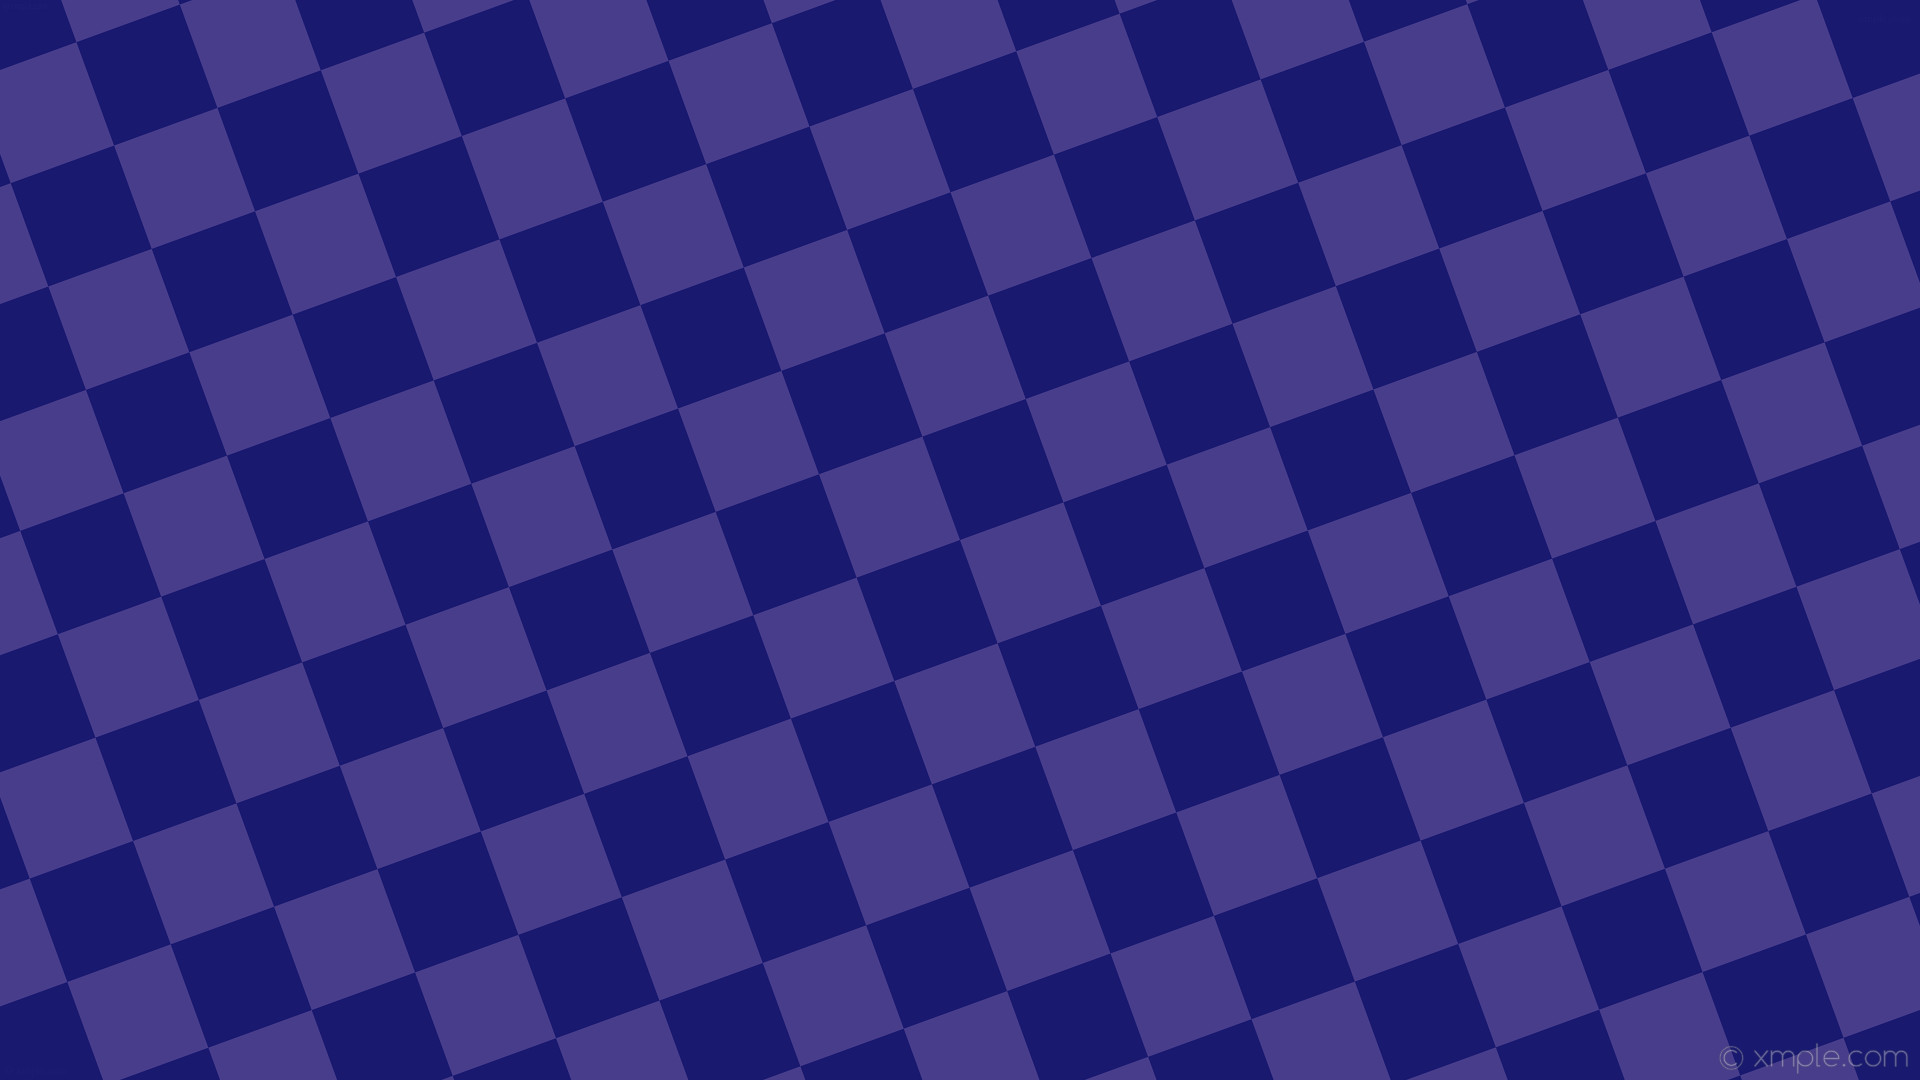 1920x1080 wallpaper squares blue checkered purple dark slate blue midnight blue  #483d8b #191970 diagonal 20